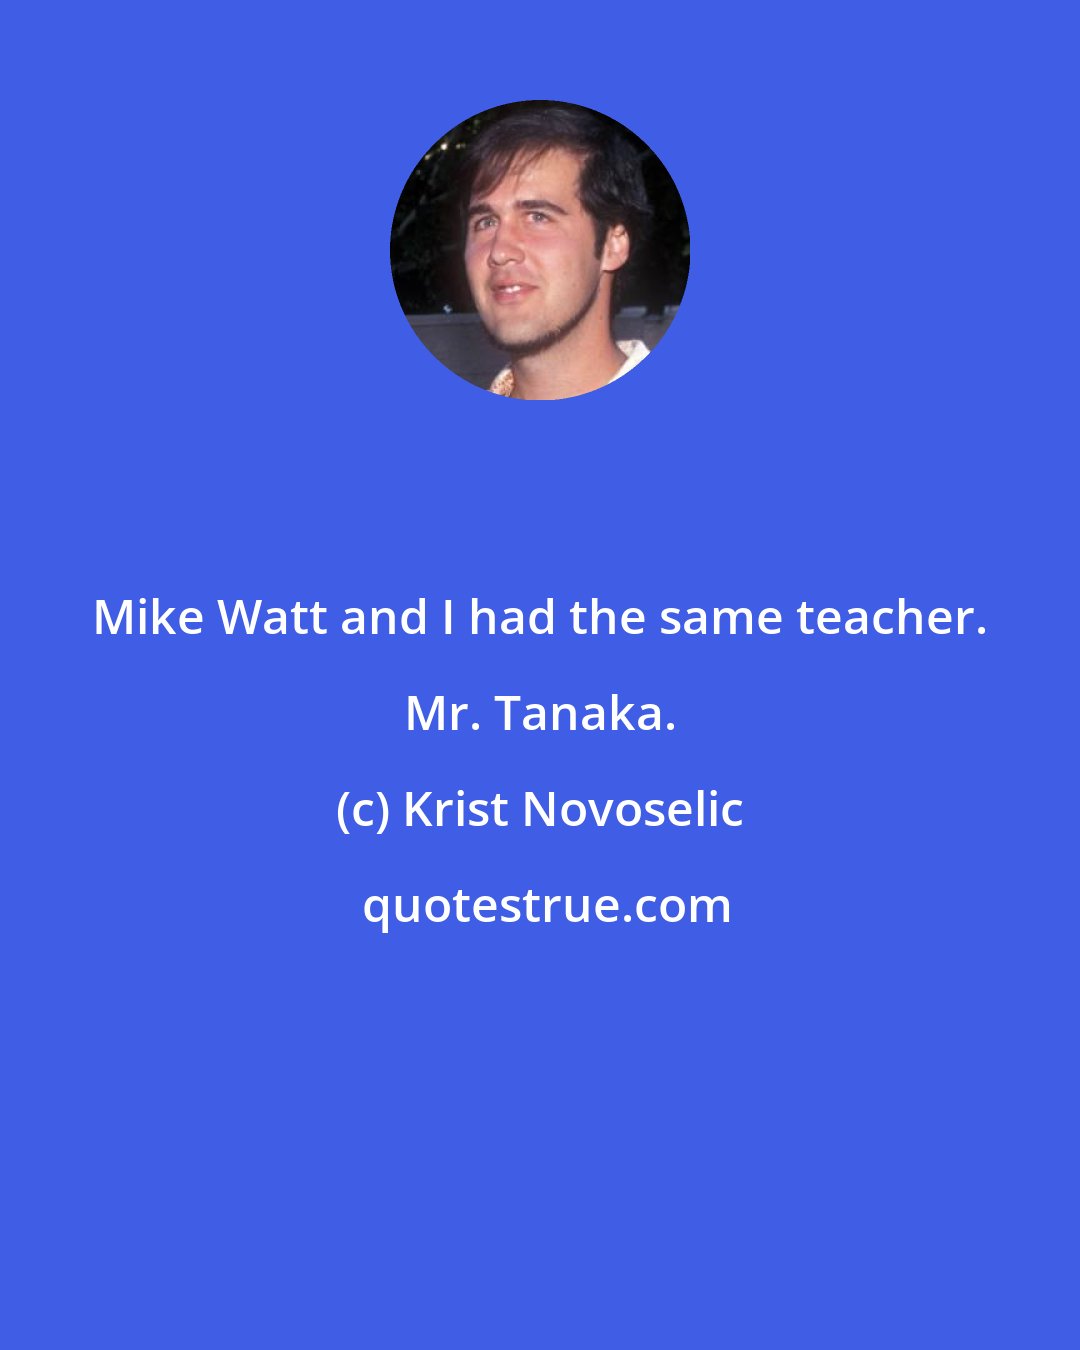 Krist Novoselic: Mike Watt and I had the same teacher. Mr. Tanaka.